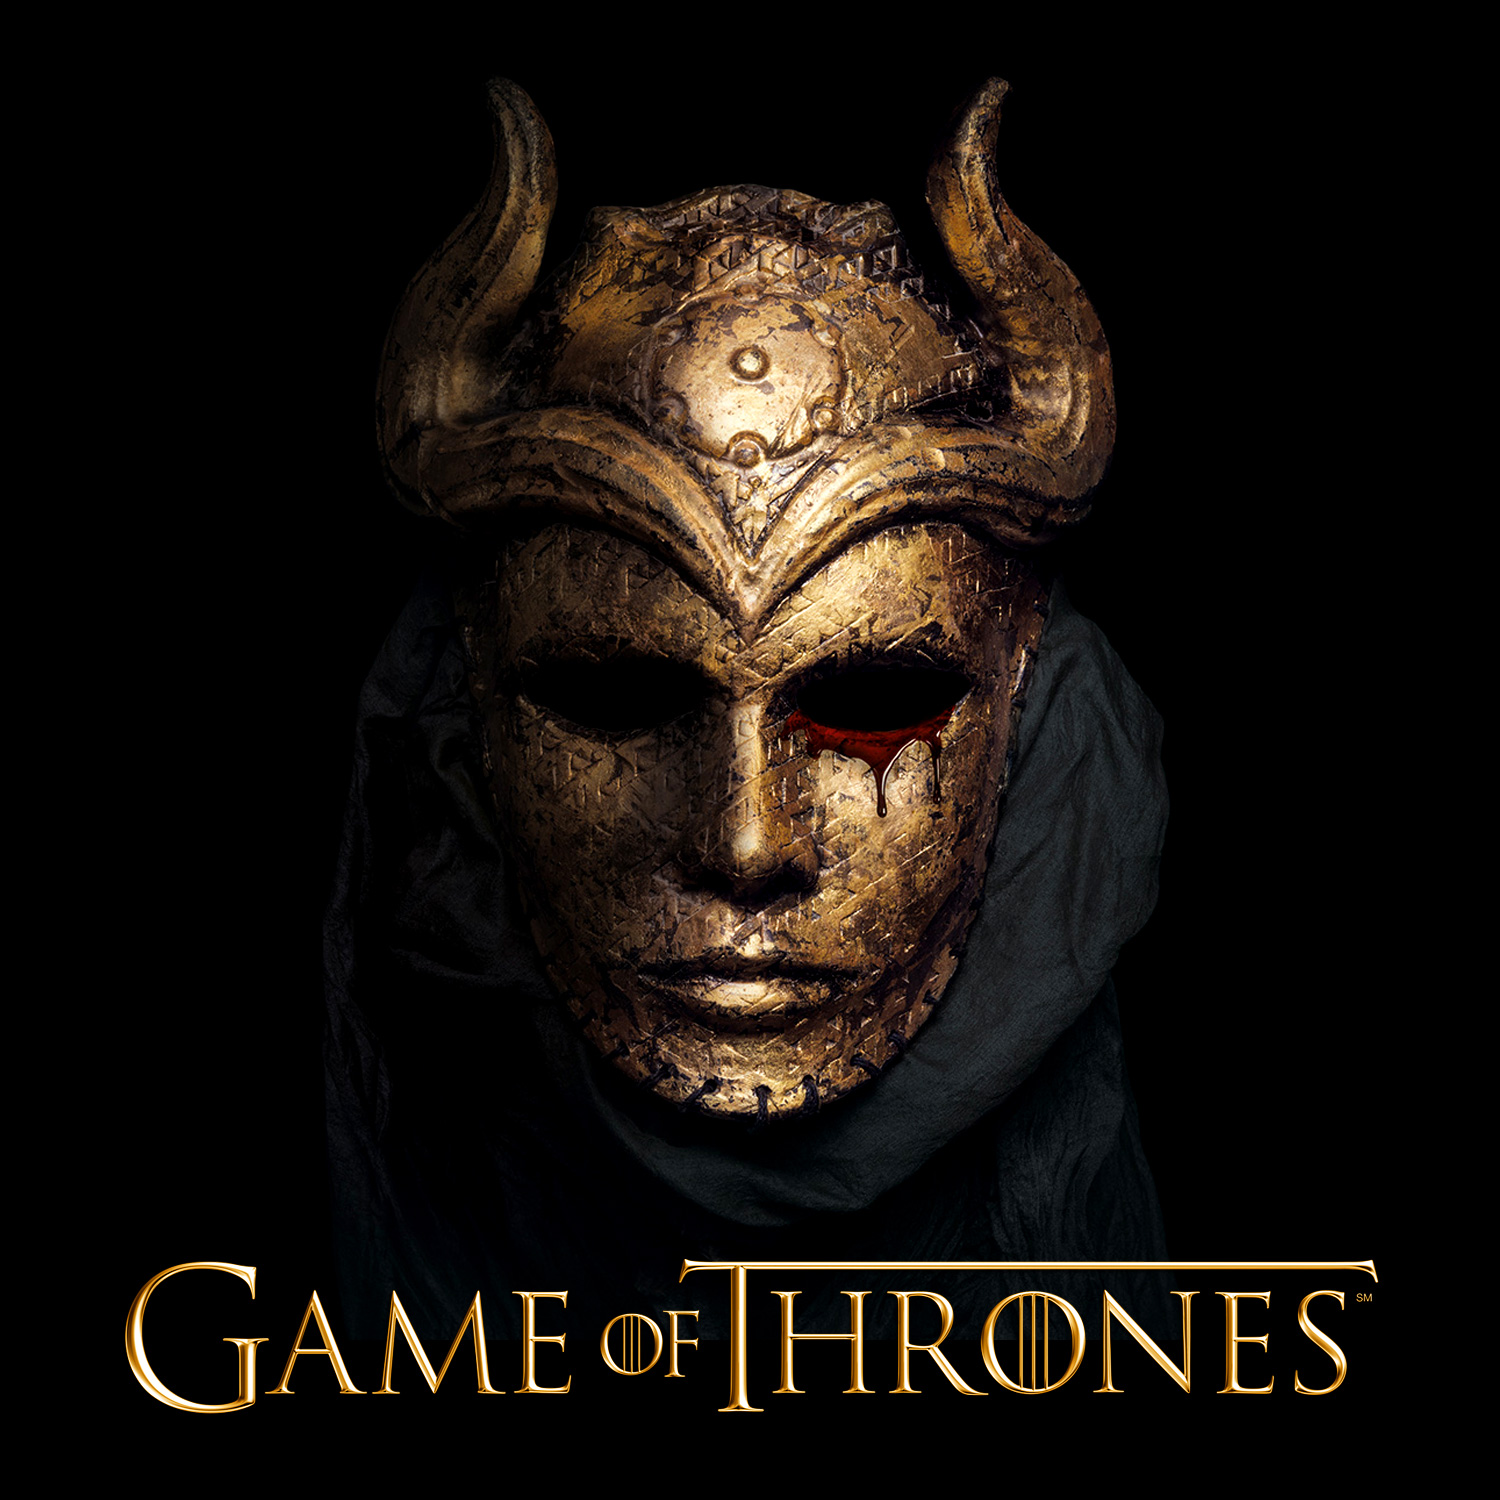 game of thrones season 2 dvd cover art